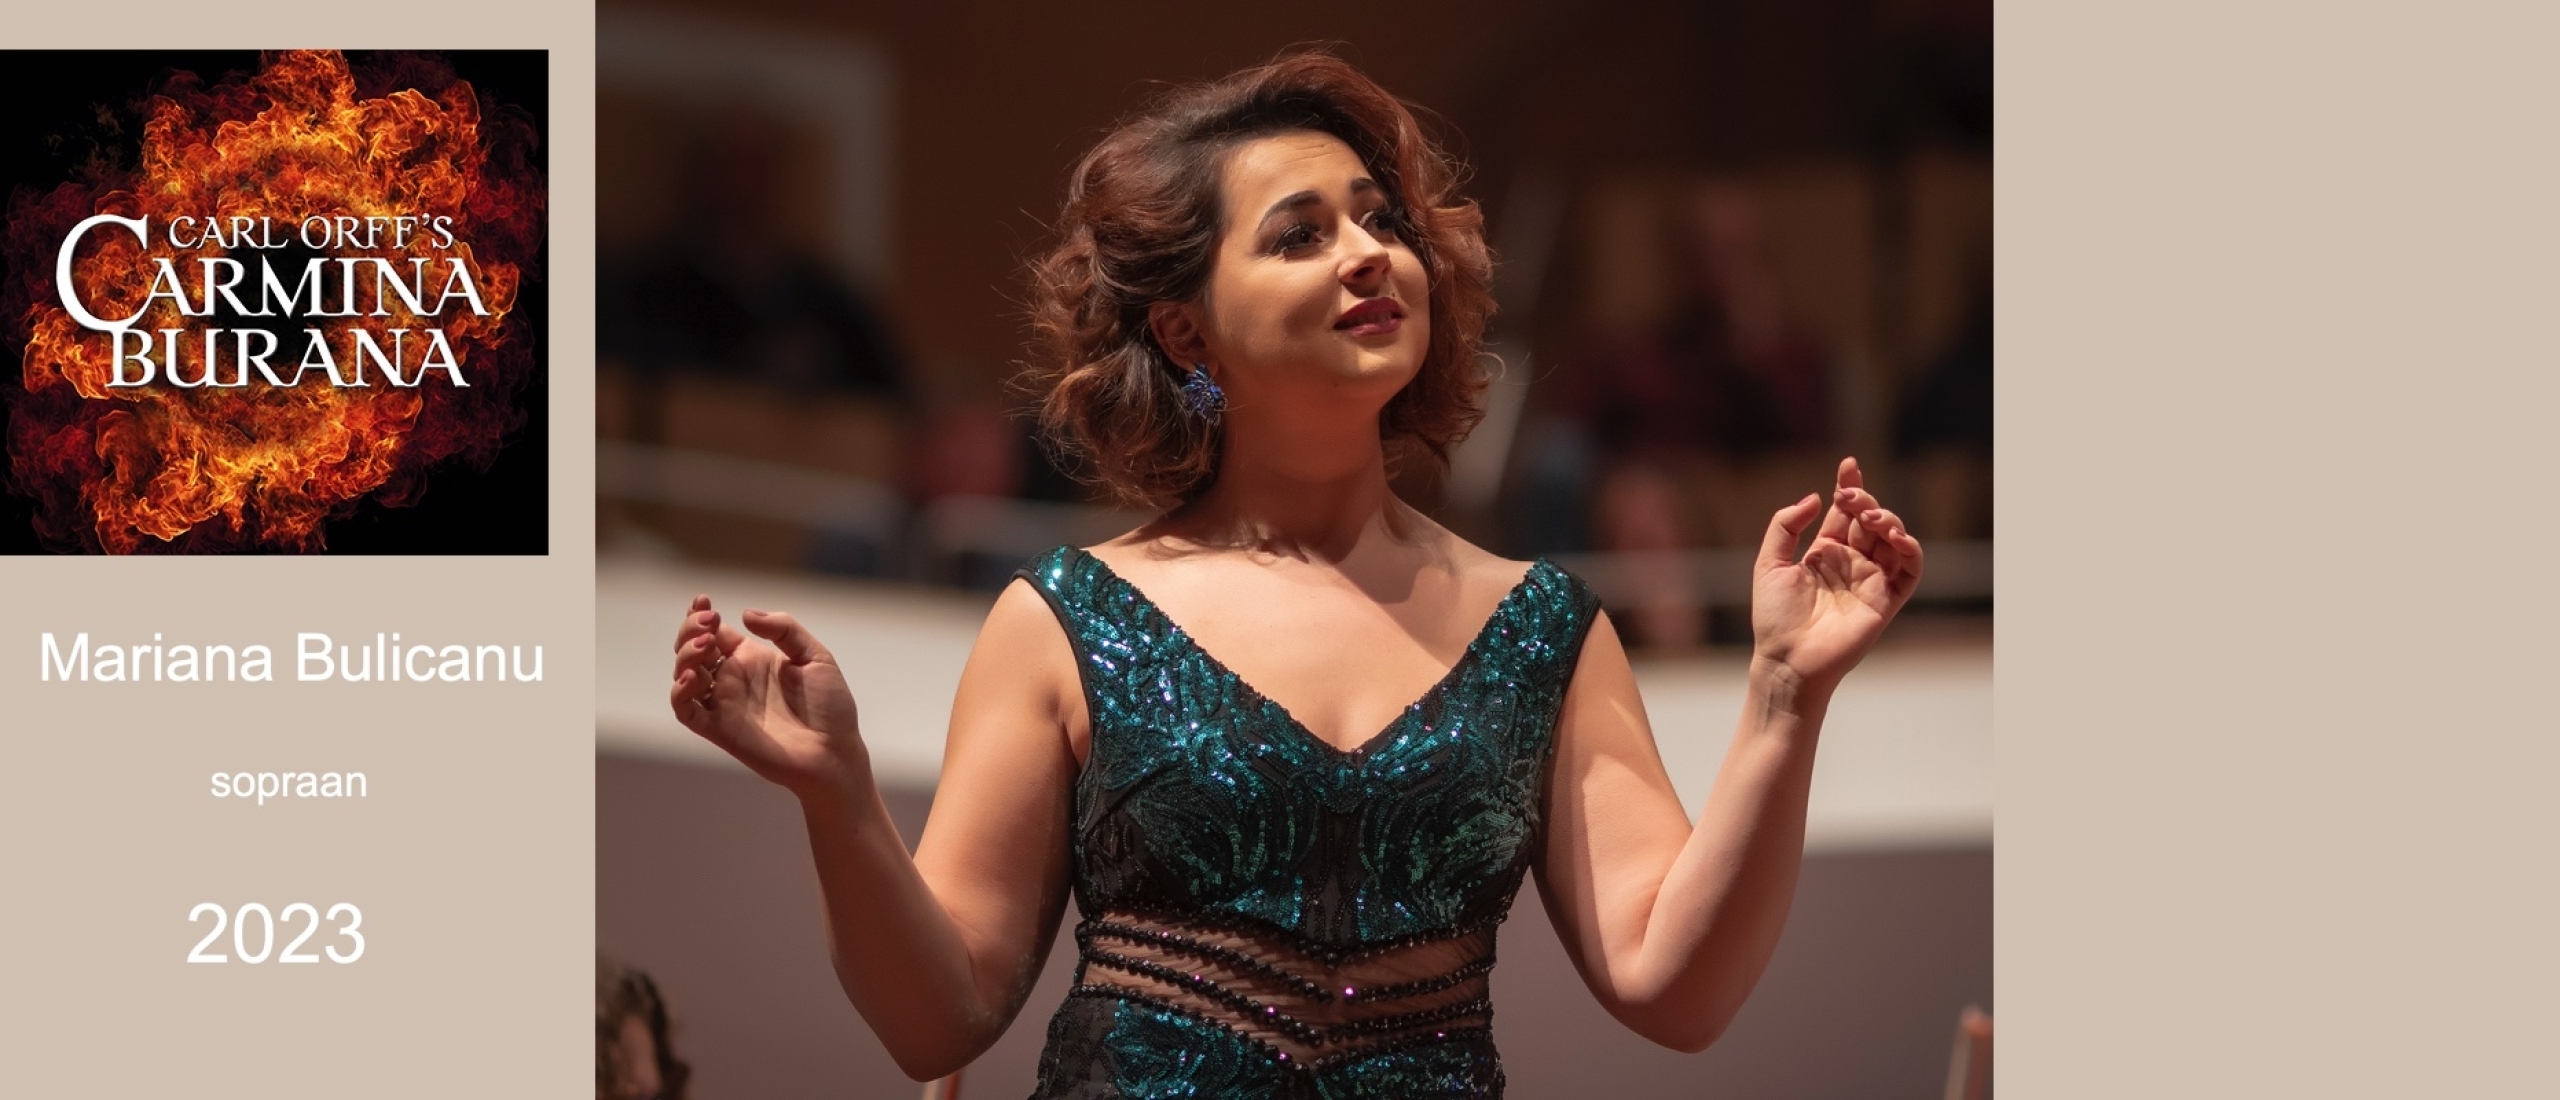 De sopraan Mariana Bulicanu Carmina Burana 2023